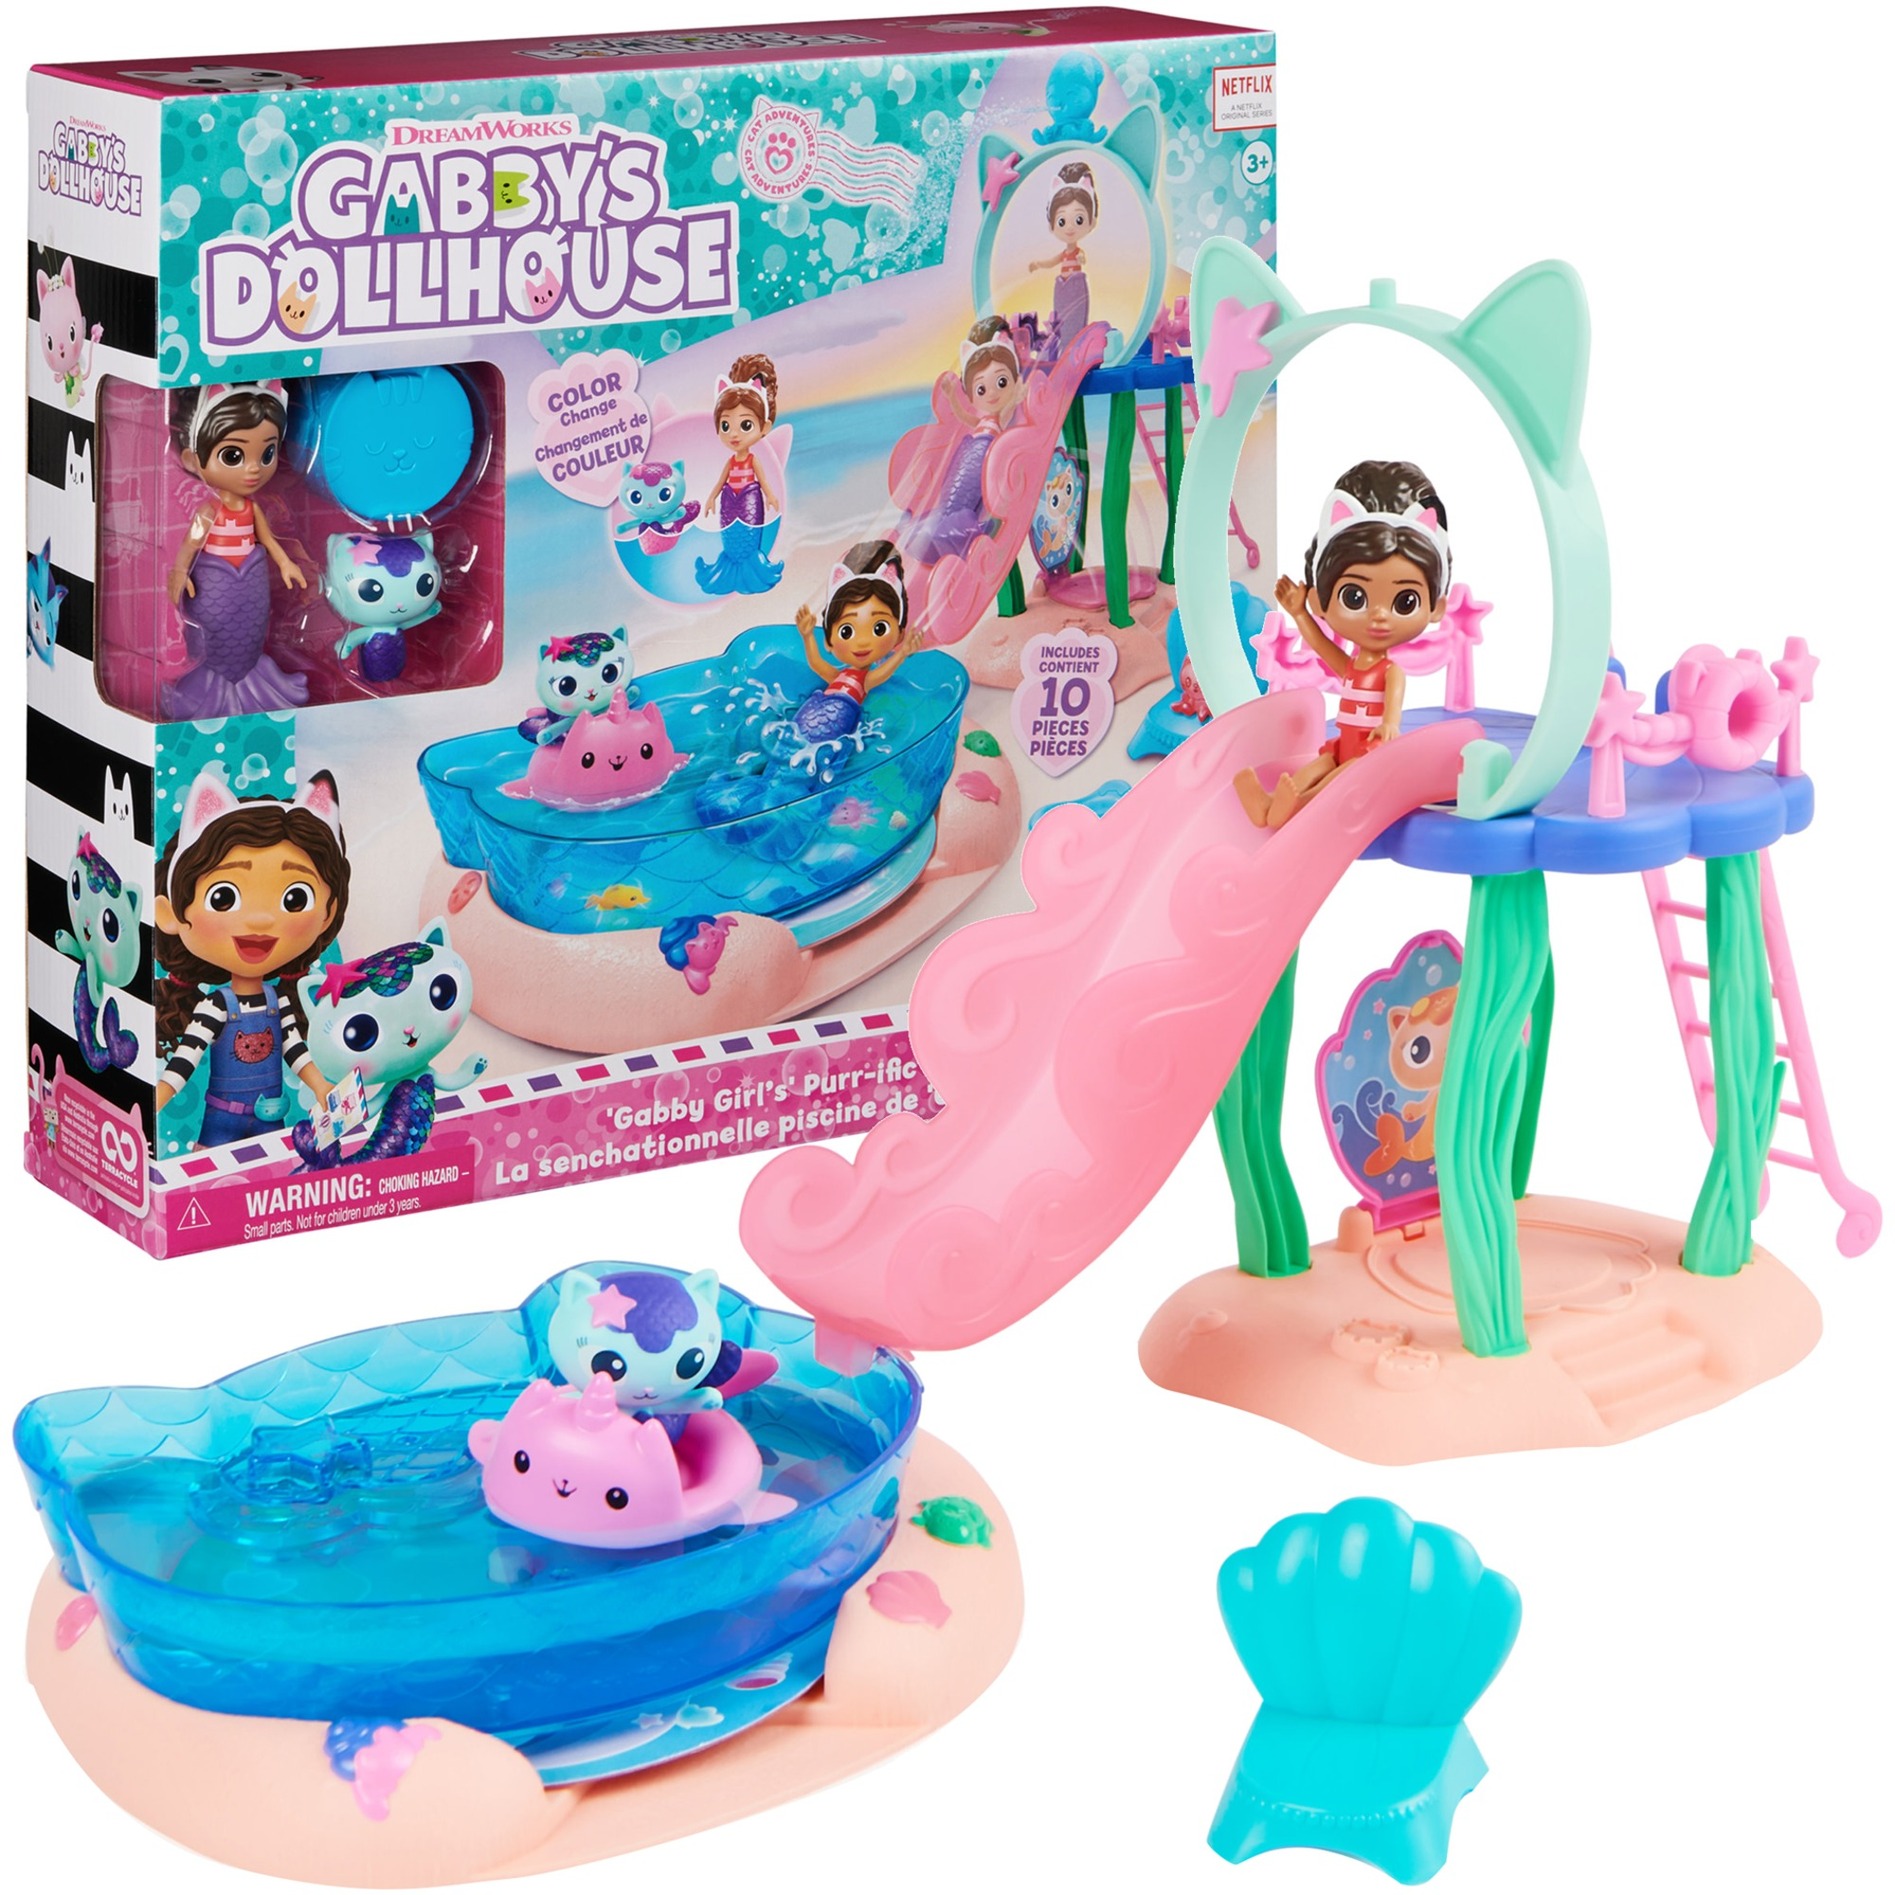 DreamWorks Gabby''s Dollhouse Cat Adventures - Purrific Pool Party Spielset, Kulisse von Spin Master